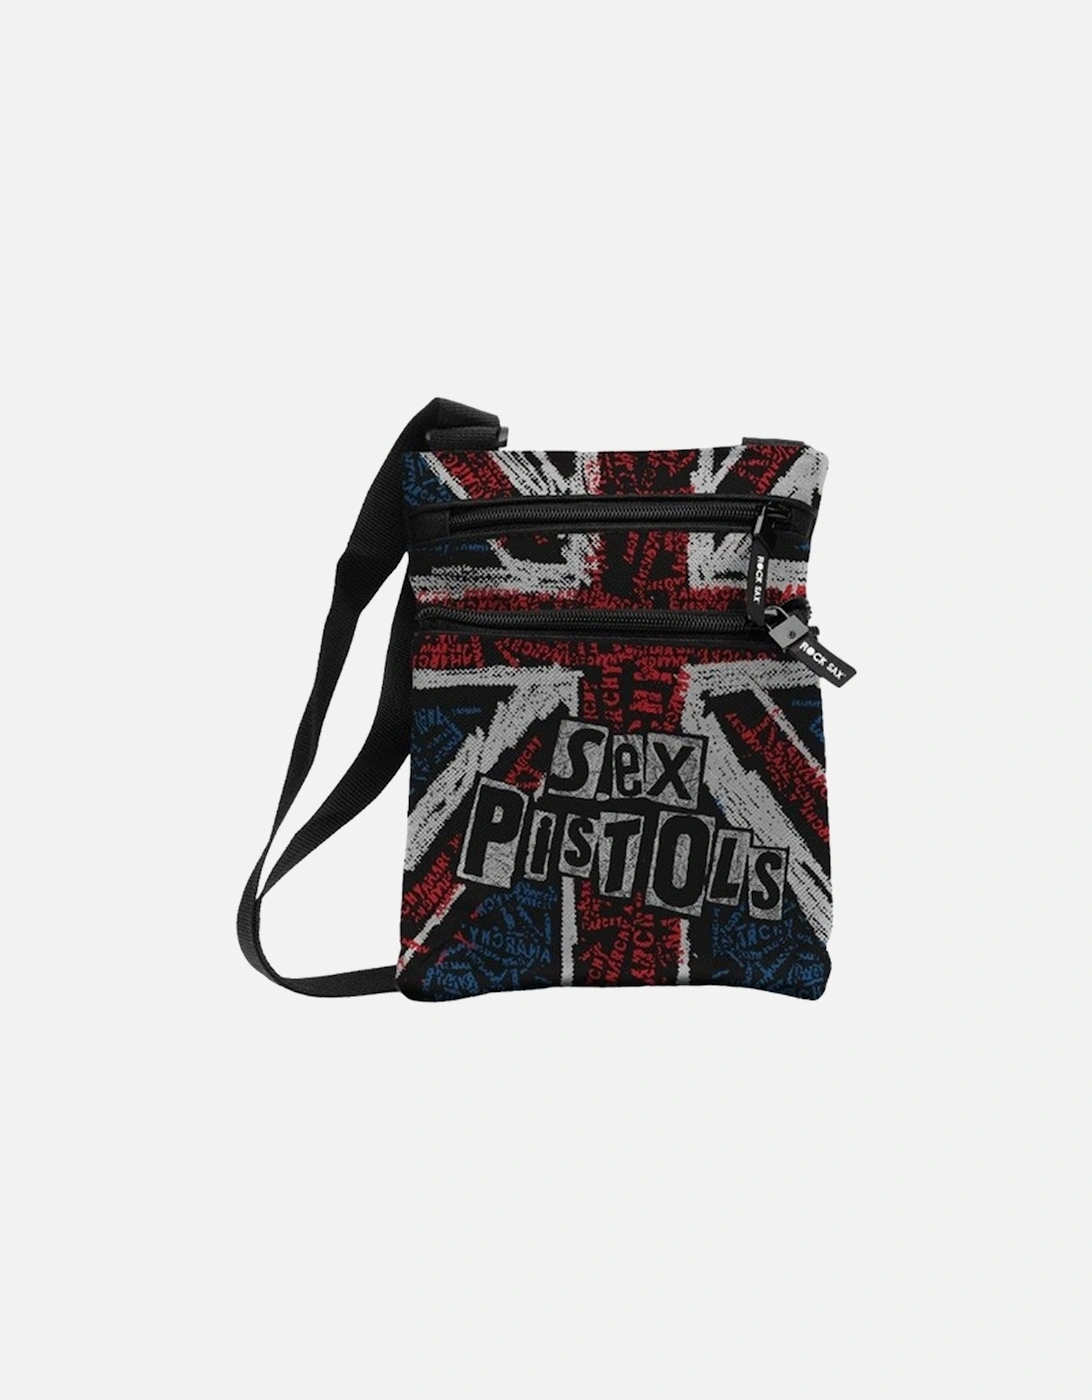 UK Flag Sex Pistols Crossbody Bag, 2 of 1